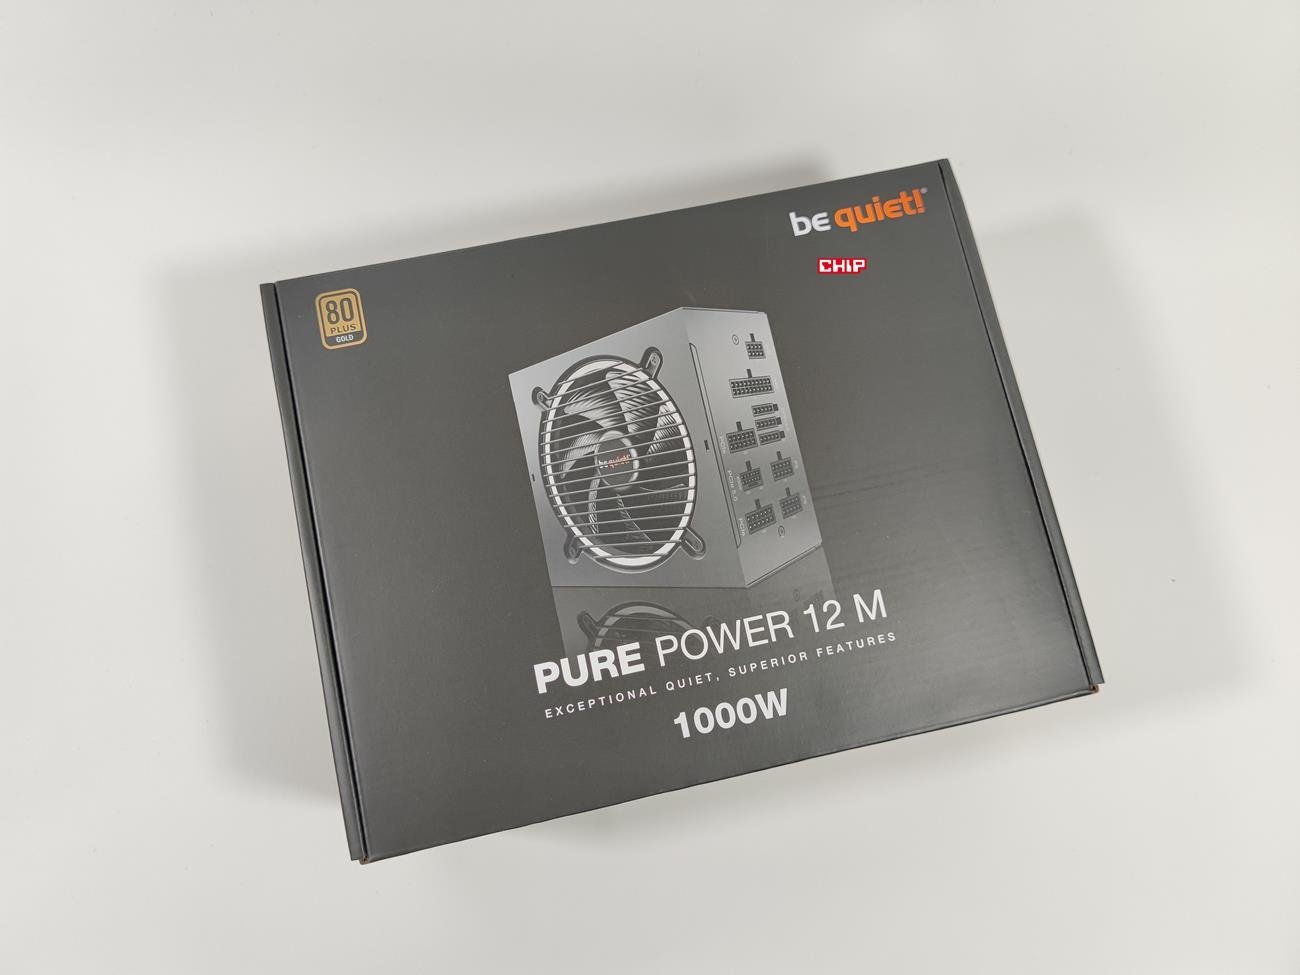 test be quiet! Pure Power 12 M 1000W, recenzja be quiet! Pure Power 12 M 1000W, opinia be quiet! Pure Power 12 M 1000W